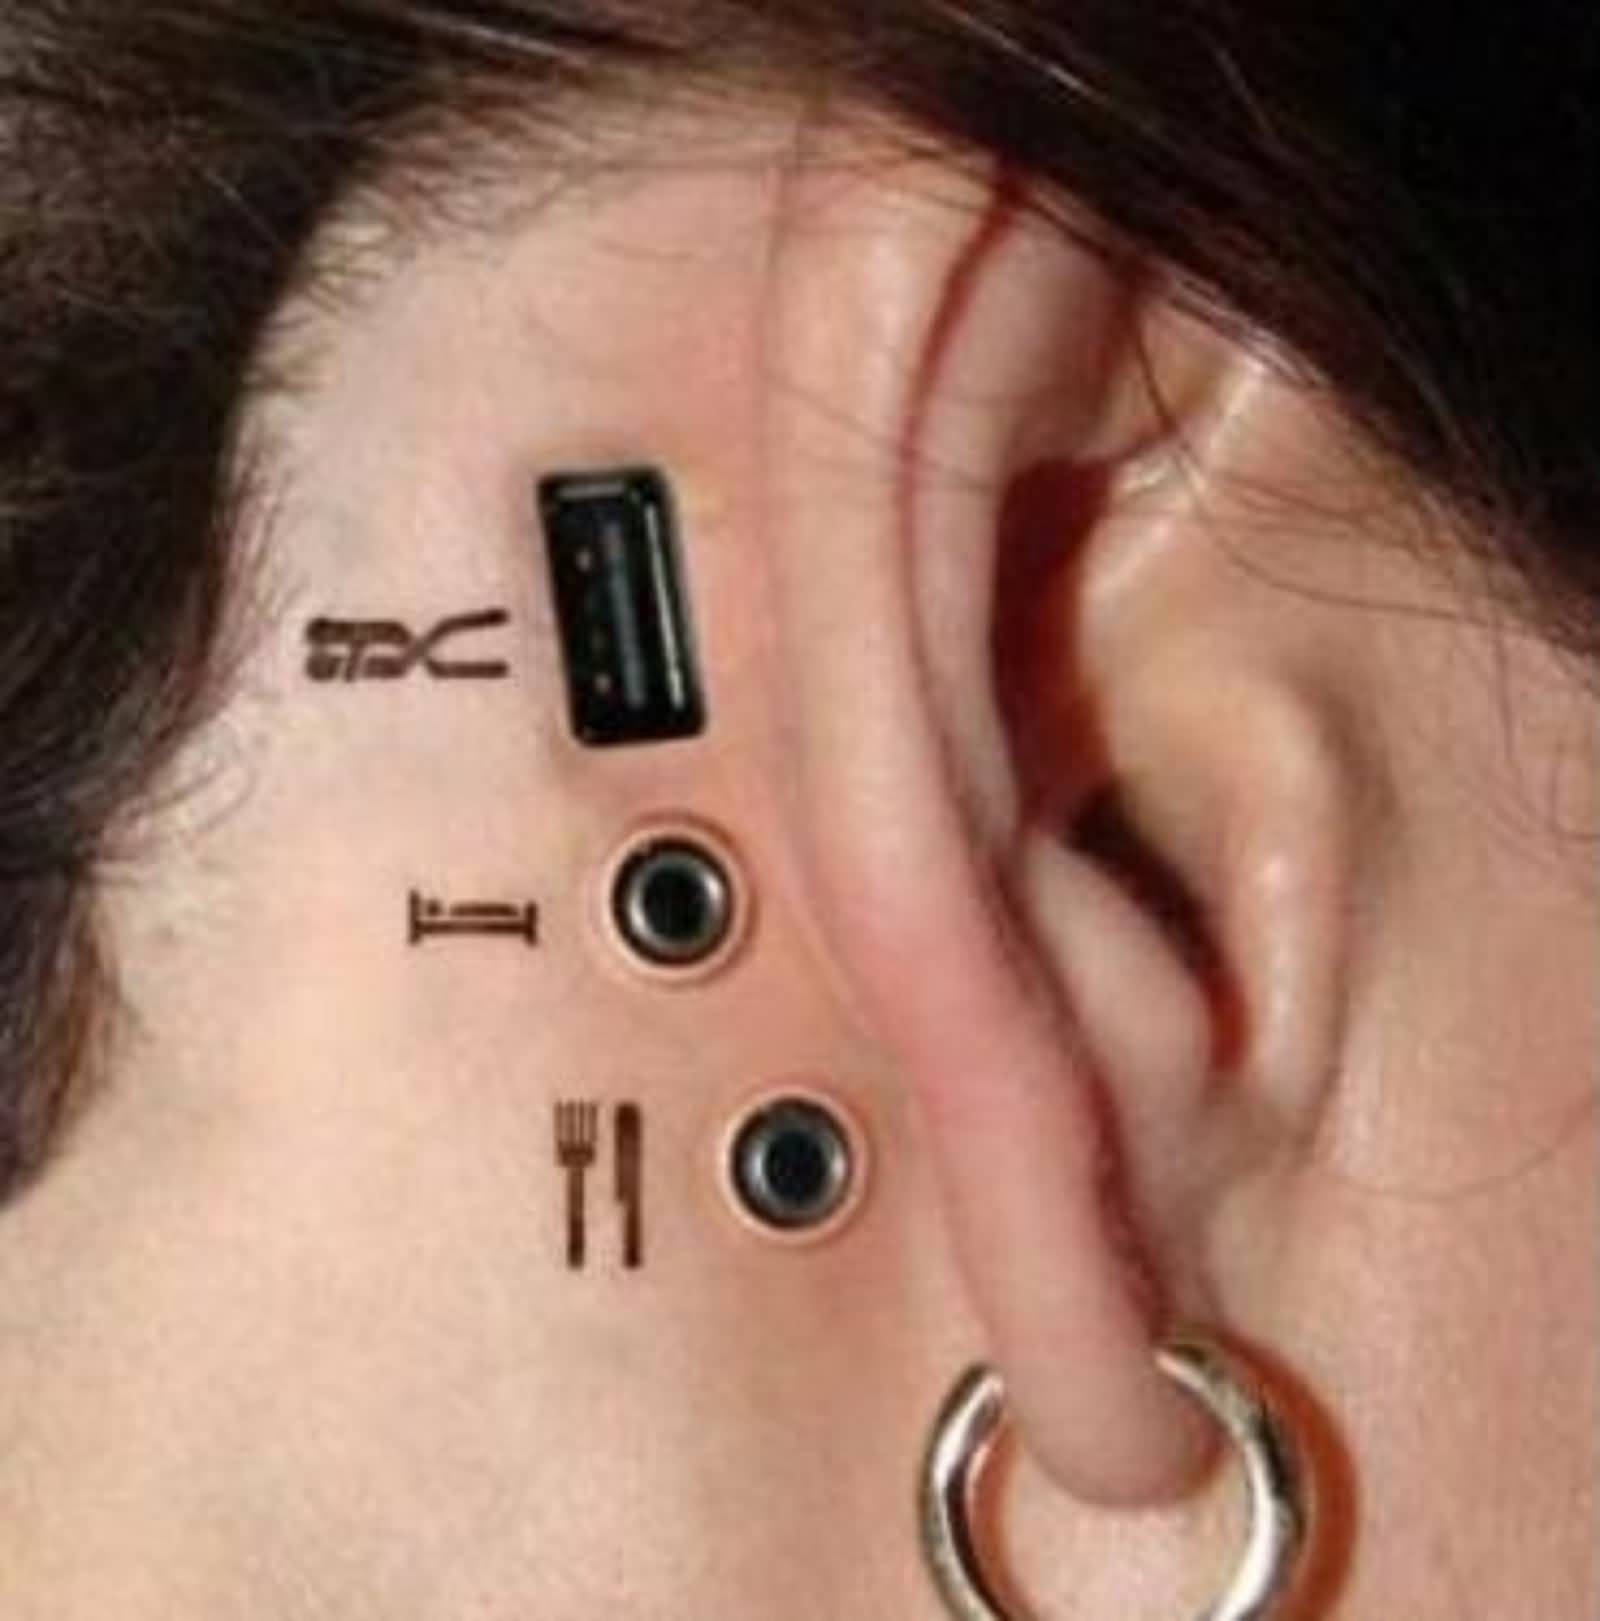 Analog Cyber Punk 3d Tattoo Behind Ear